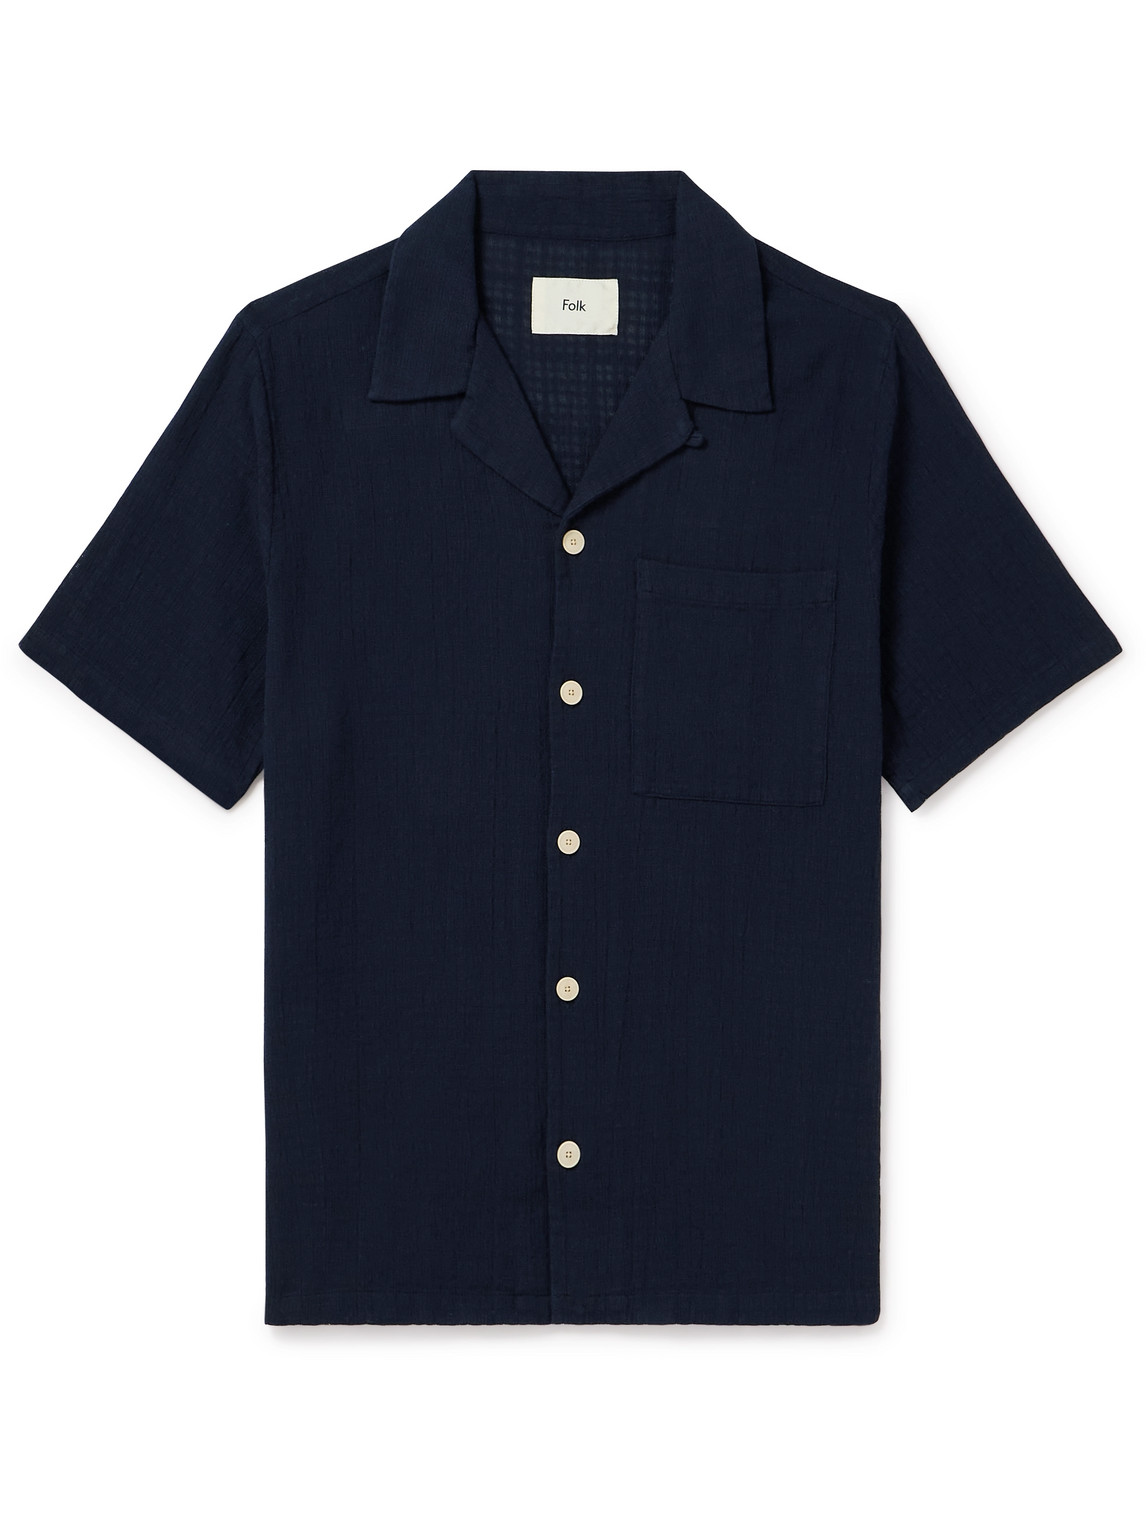 Convertible-Collar Cotton-Gauze Shirt